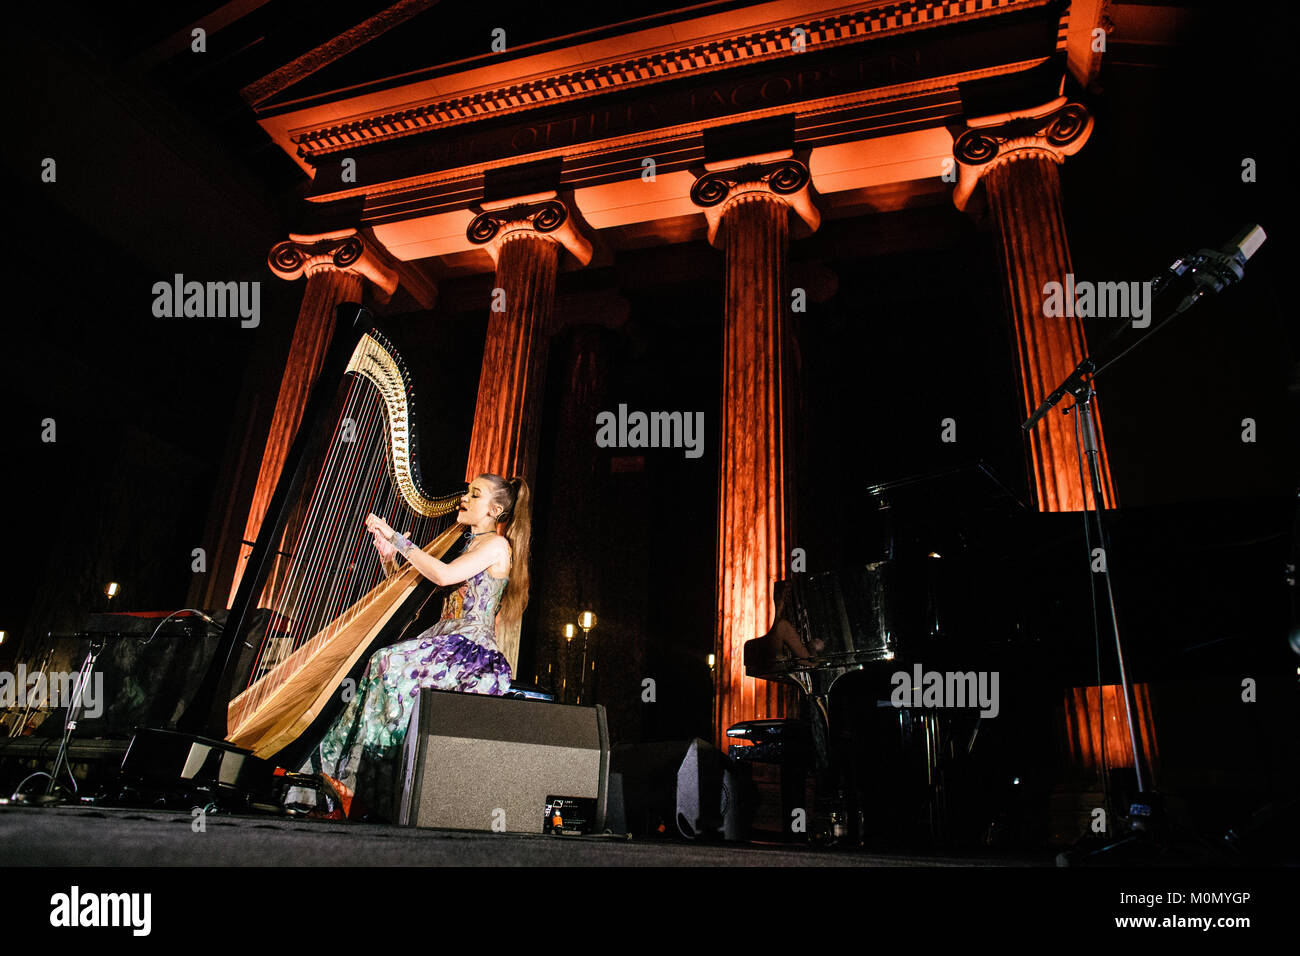 The American singer, songwriter and harpist Joanna Newsom performs a live concert at the New Carlsberg Glyptotek in Copenhagen as part of the Danish music festival Frost Festival 2016. Denmark, 26/02 2016. Stock Photo